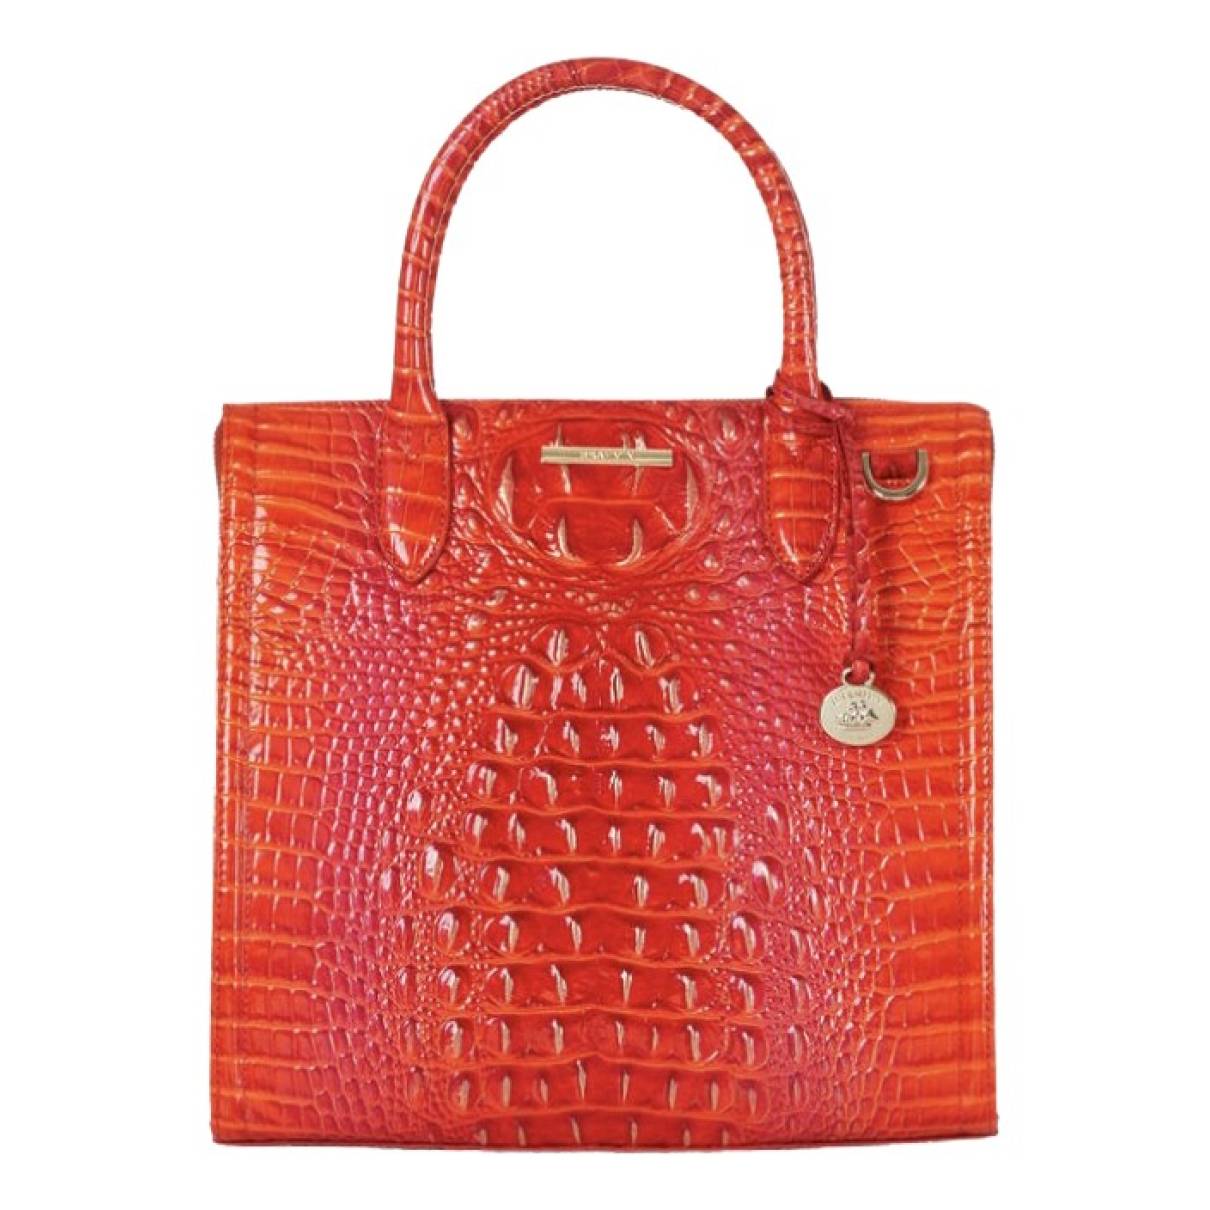 Leather handbag Brahmin